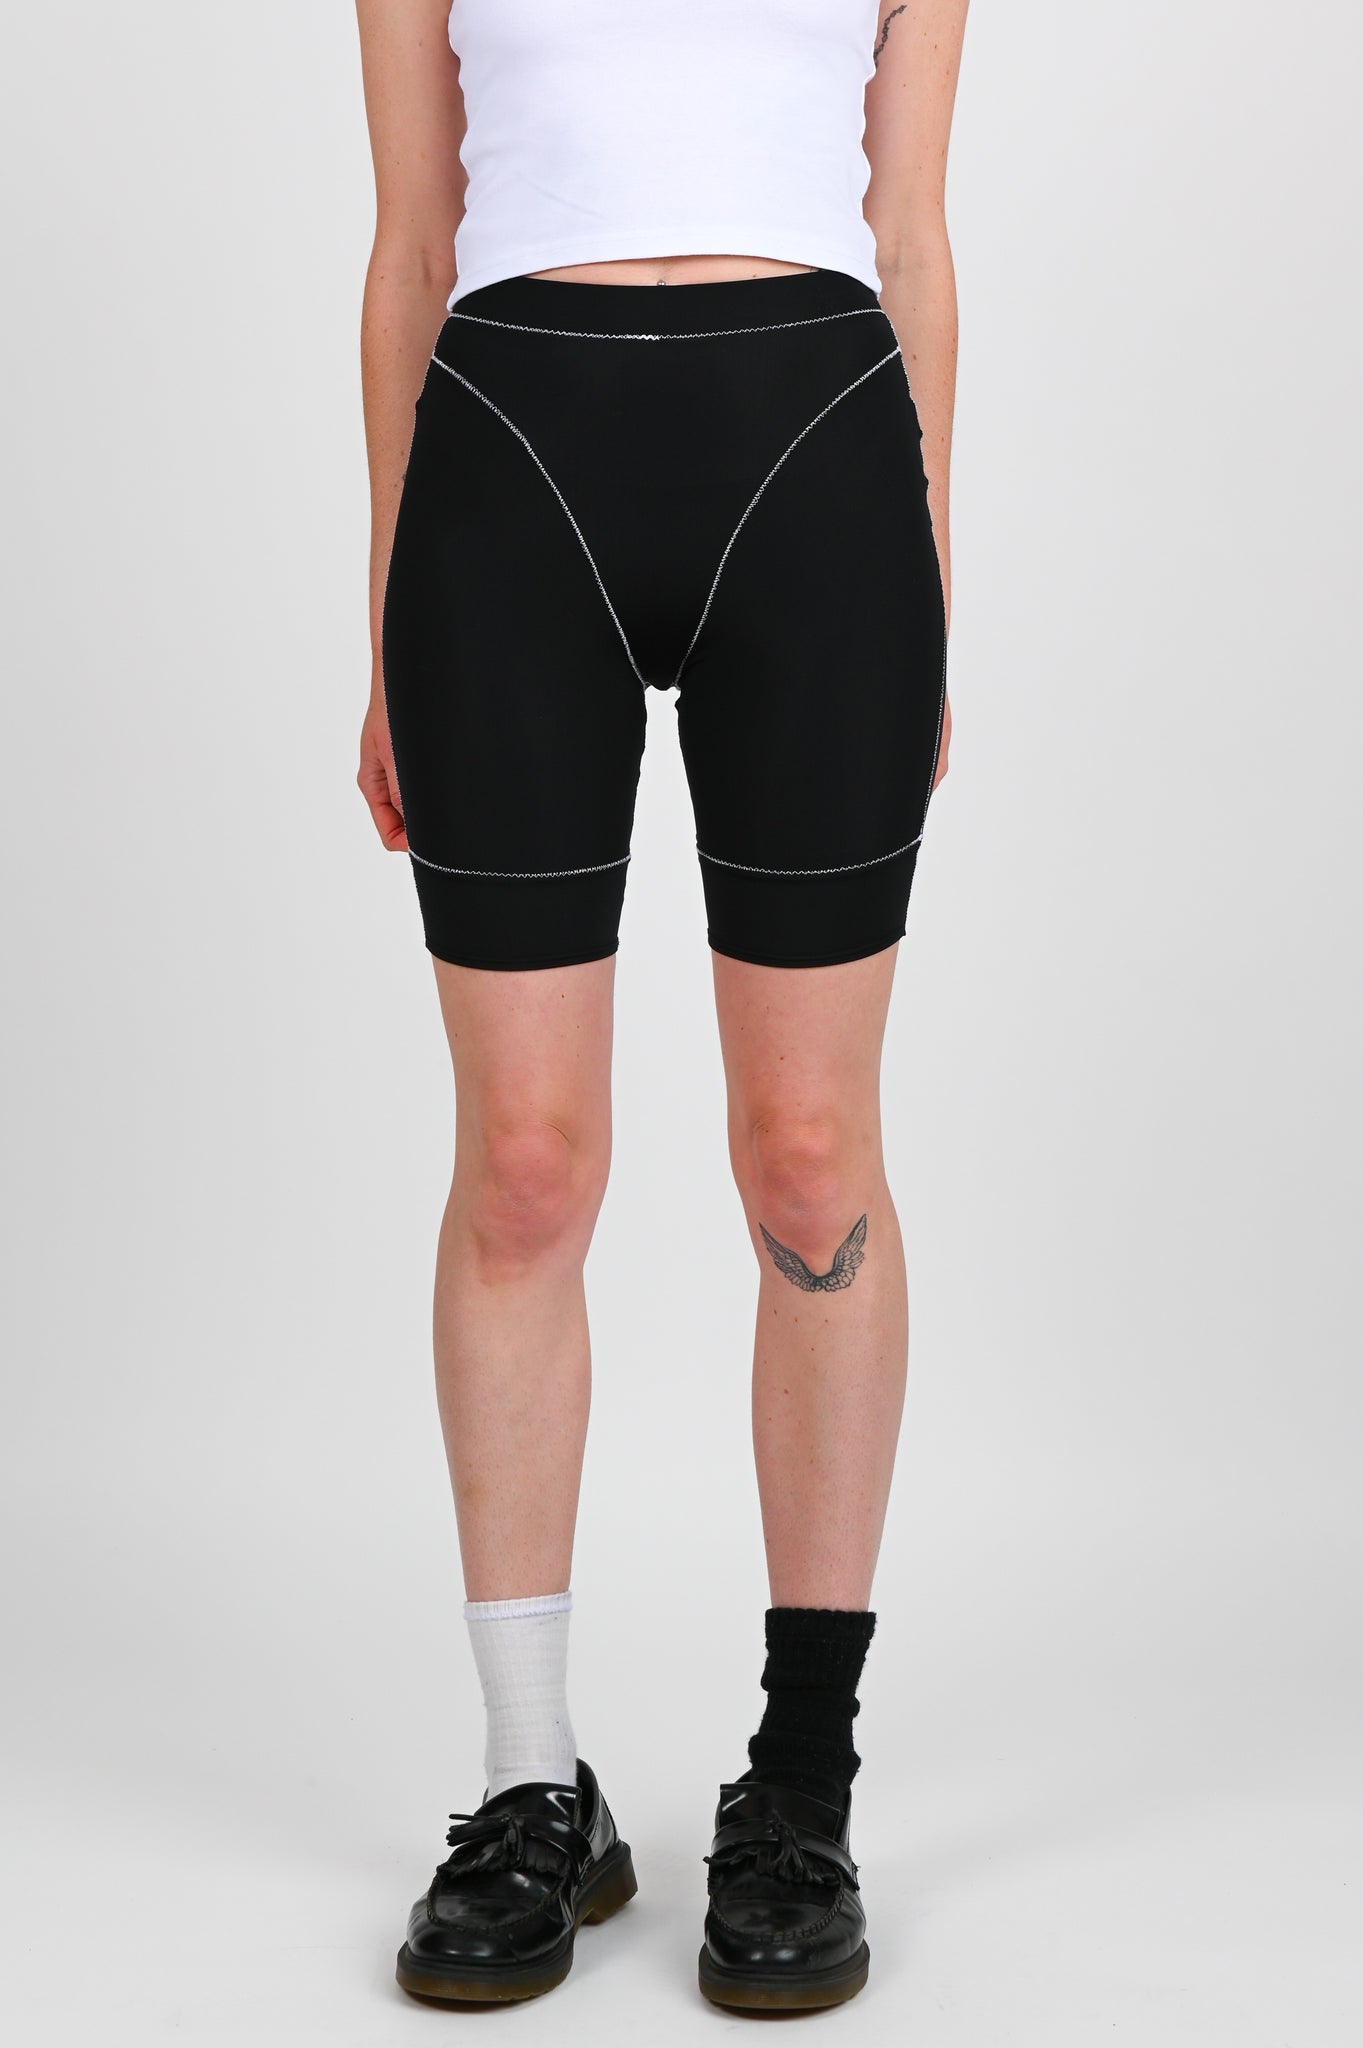 BRB 'Fitness' Bike Shorts in Black